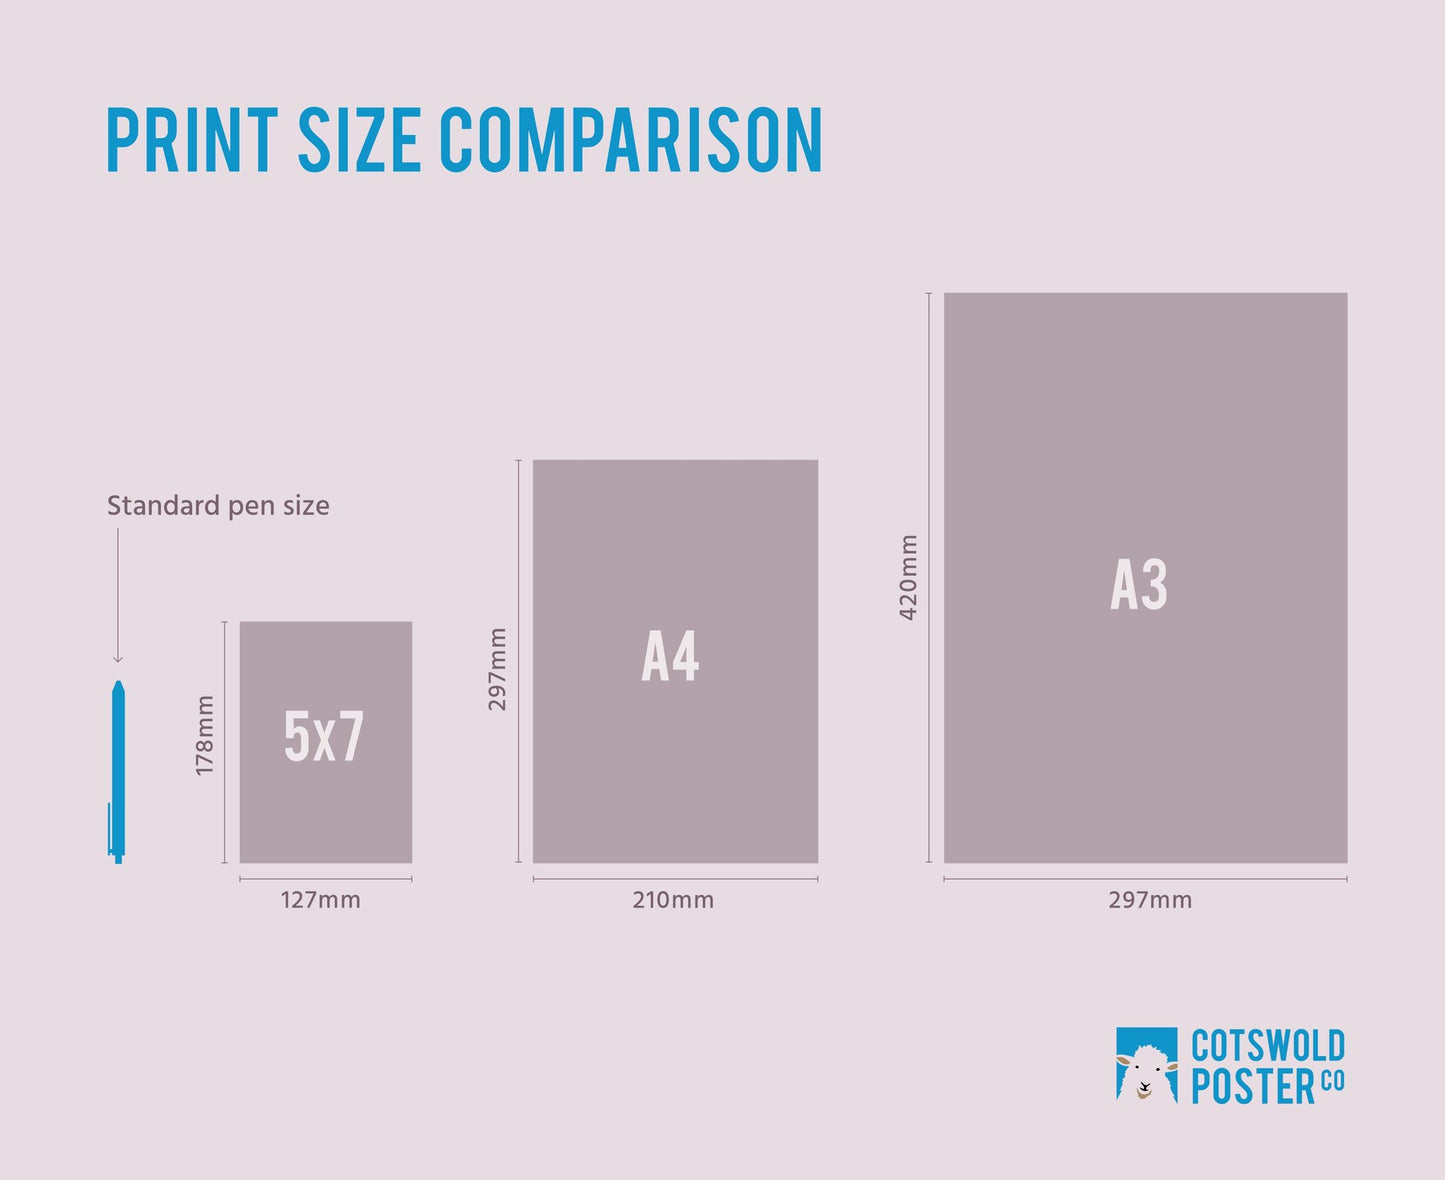 Graphic comparing print sizes